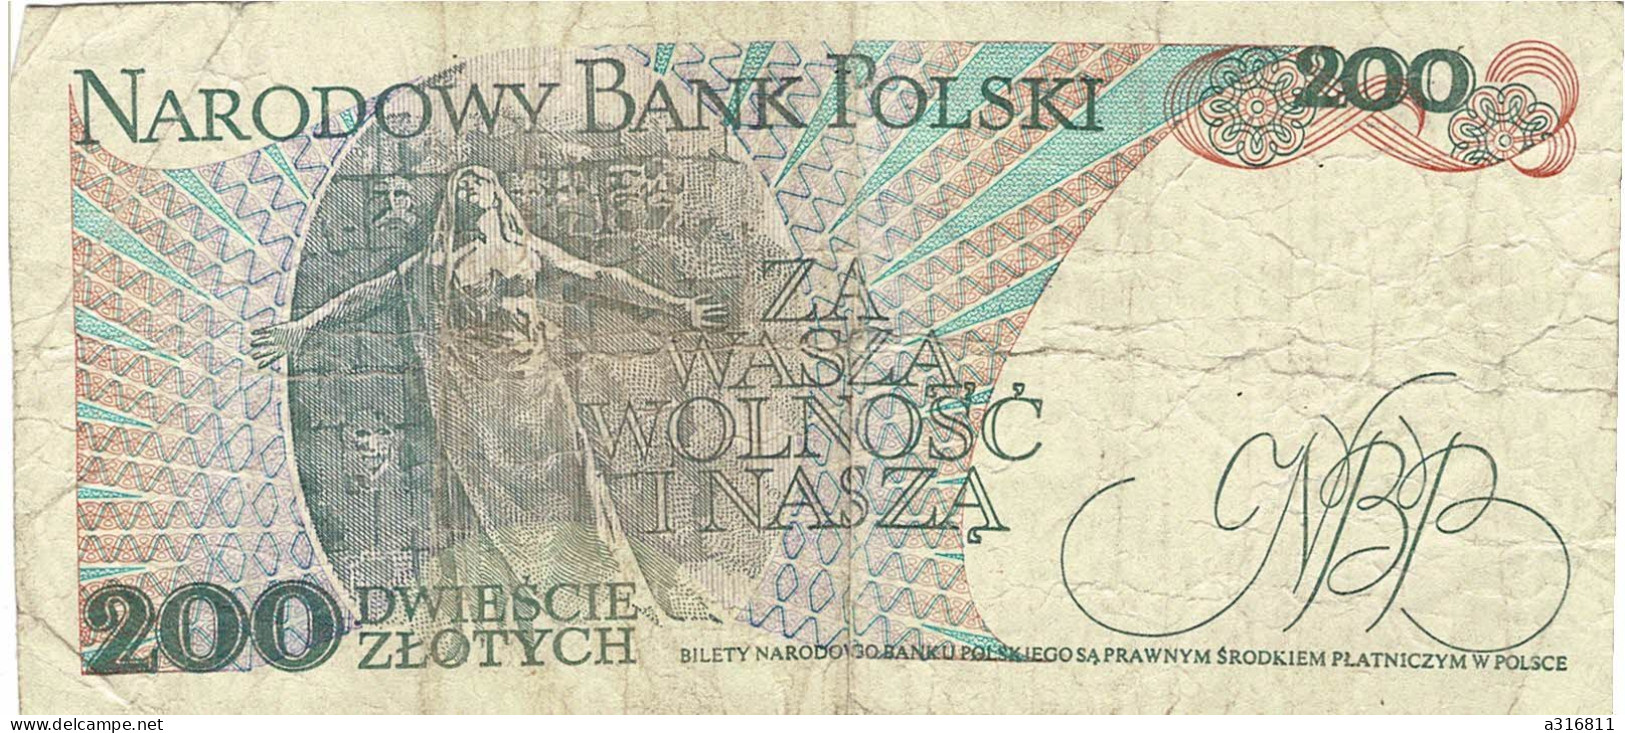 1988 POLONIA BANCONOTE NARODOWY BANK POLSKI 200 DWIESCIE ZLOTYCH BANKNOT POLACCO BILLET DE BANQUE POLONAIS - Pologne